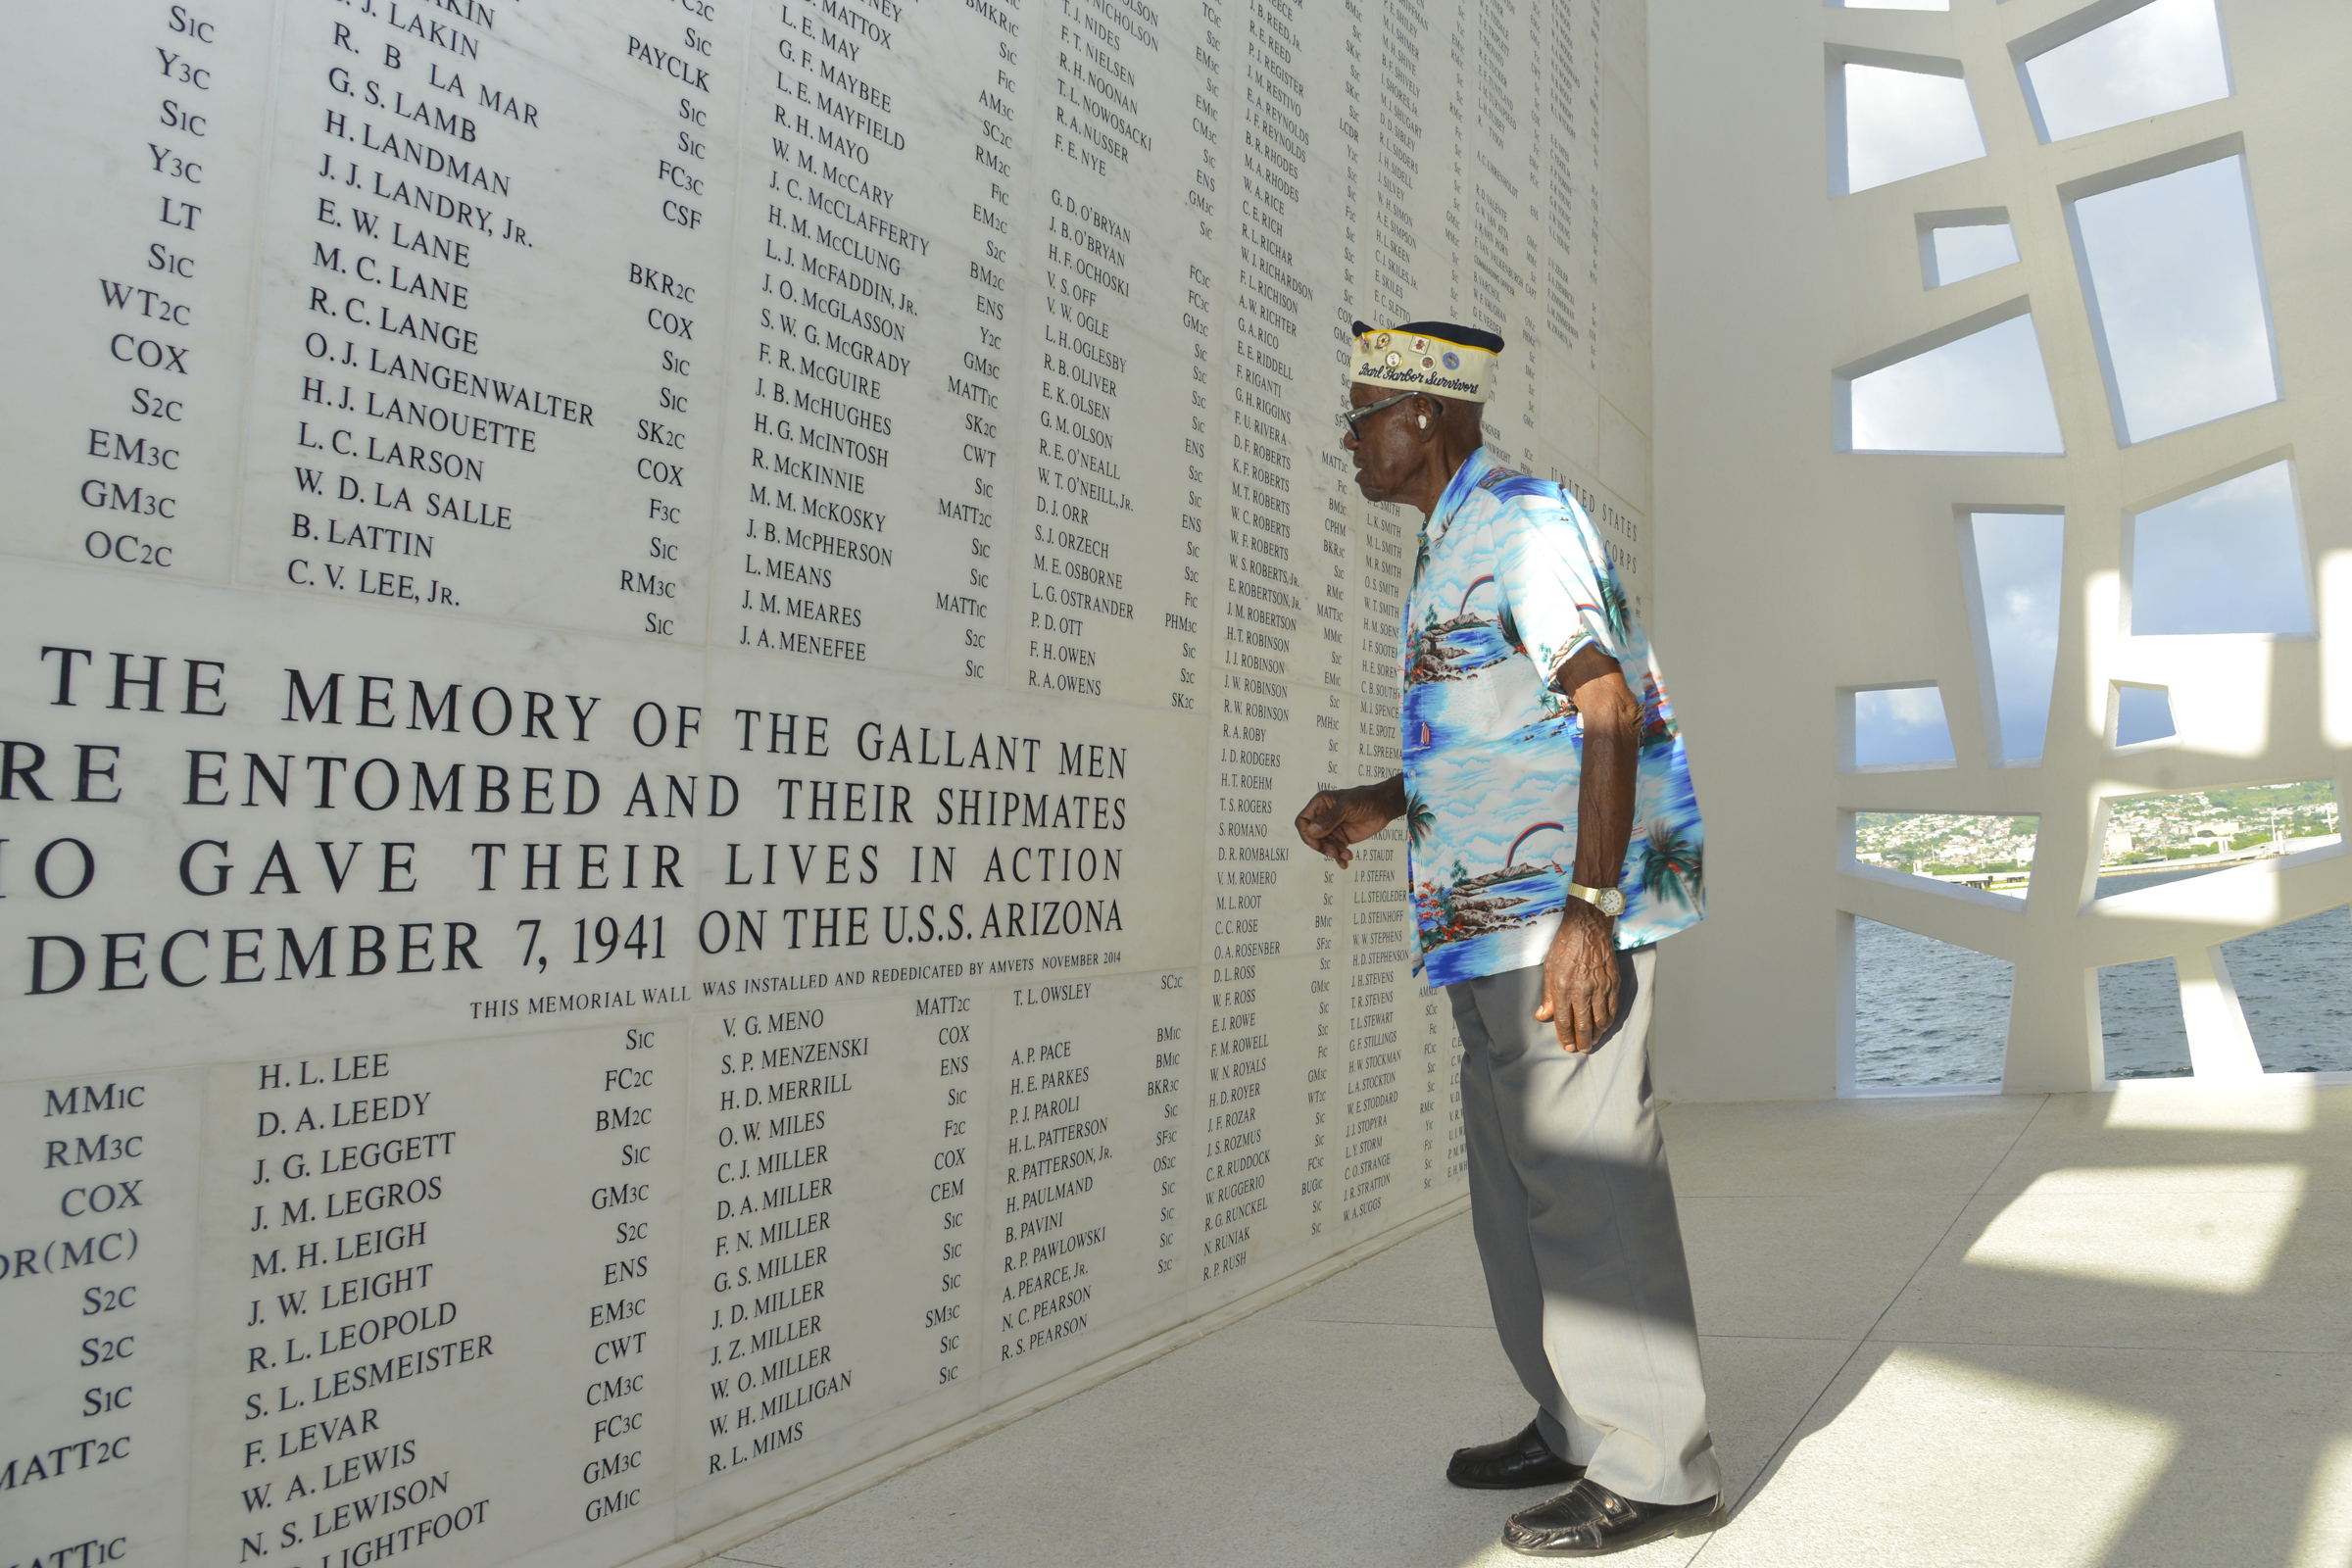 Pearl Harbor survivors return 74 years later